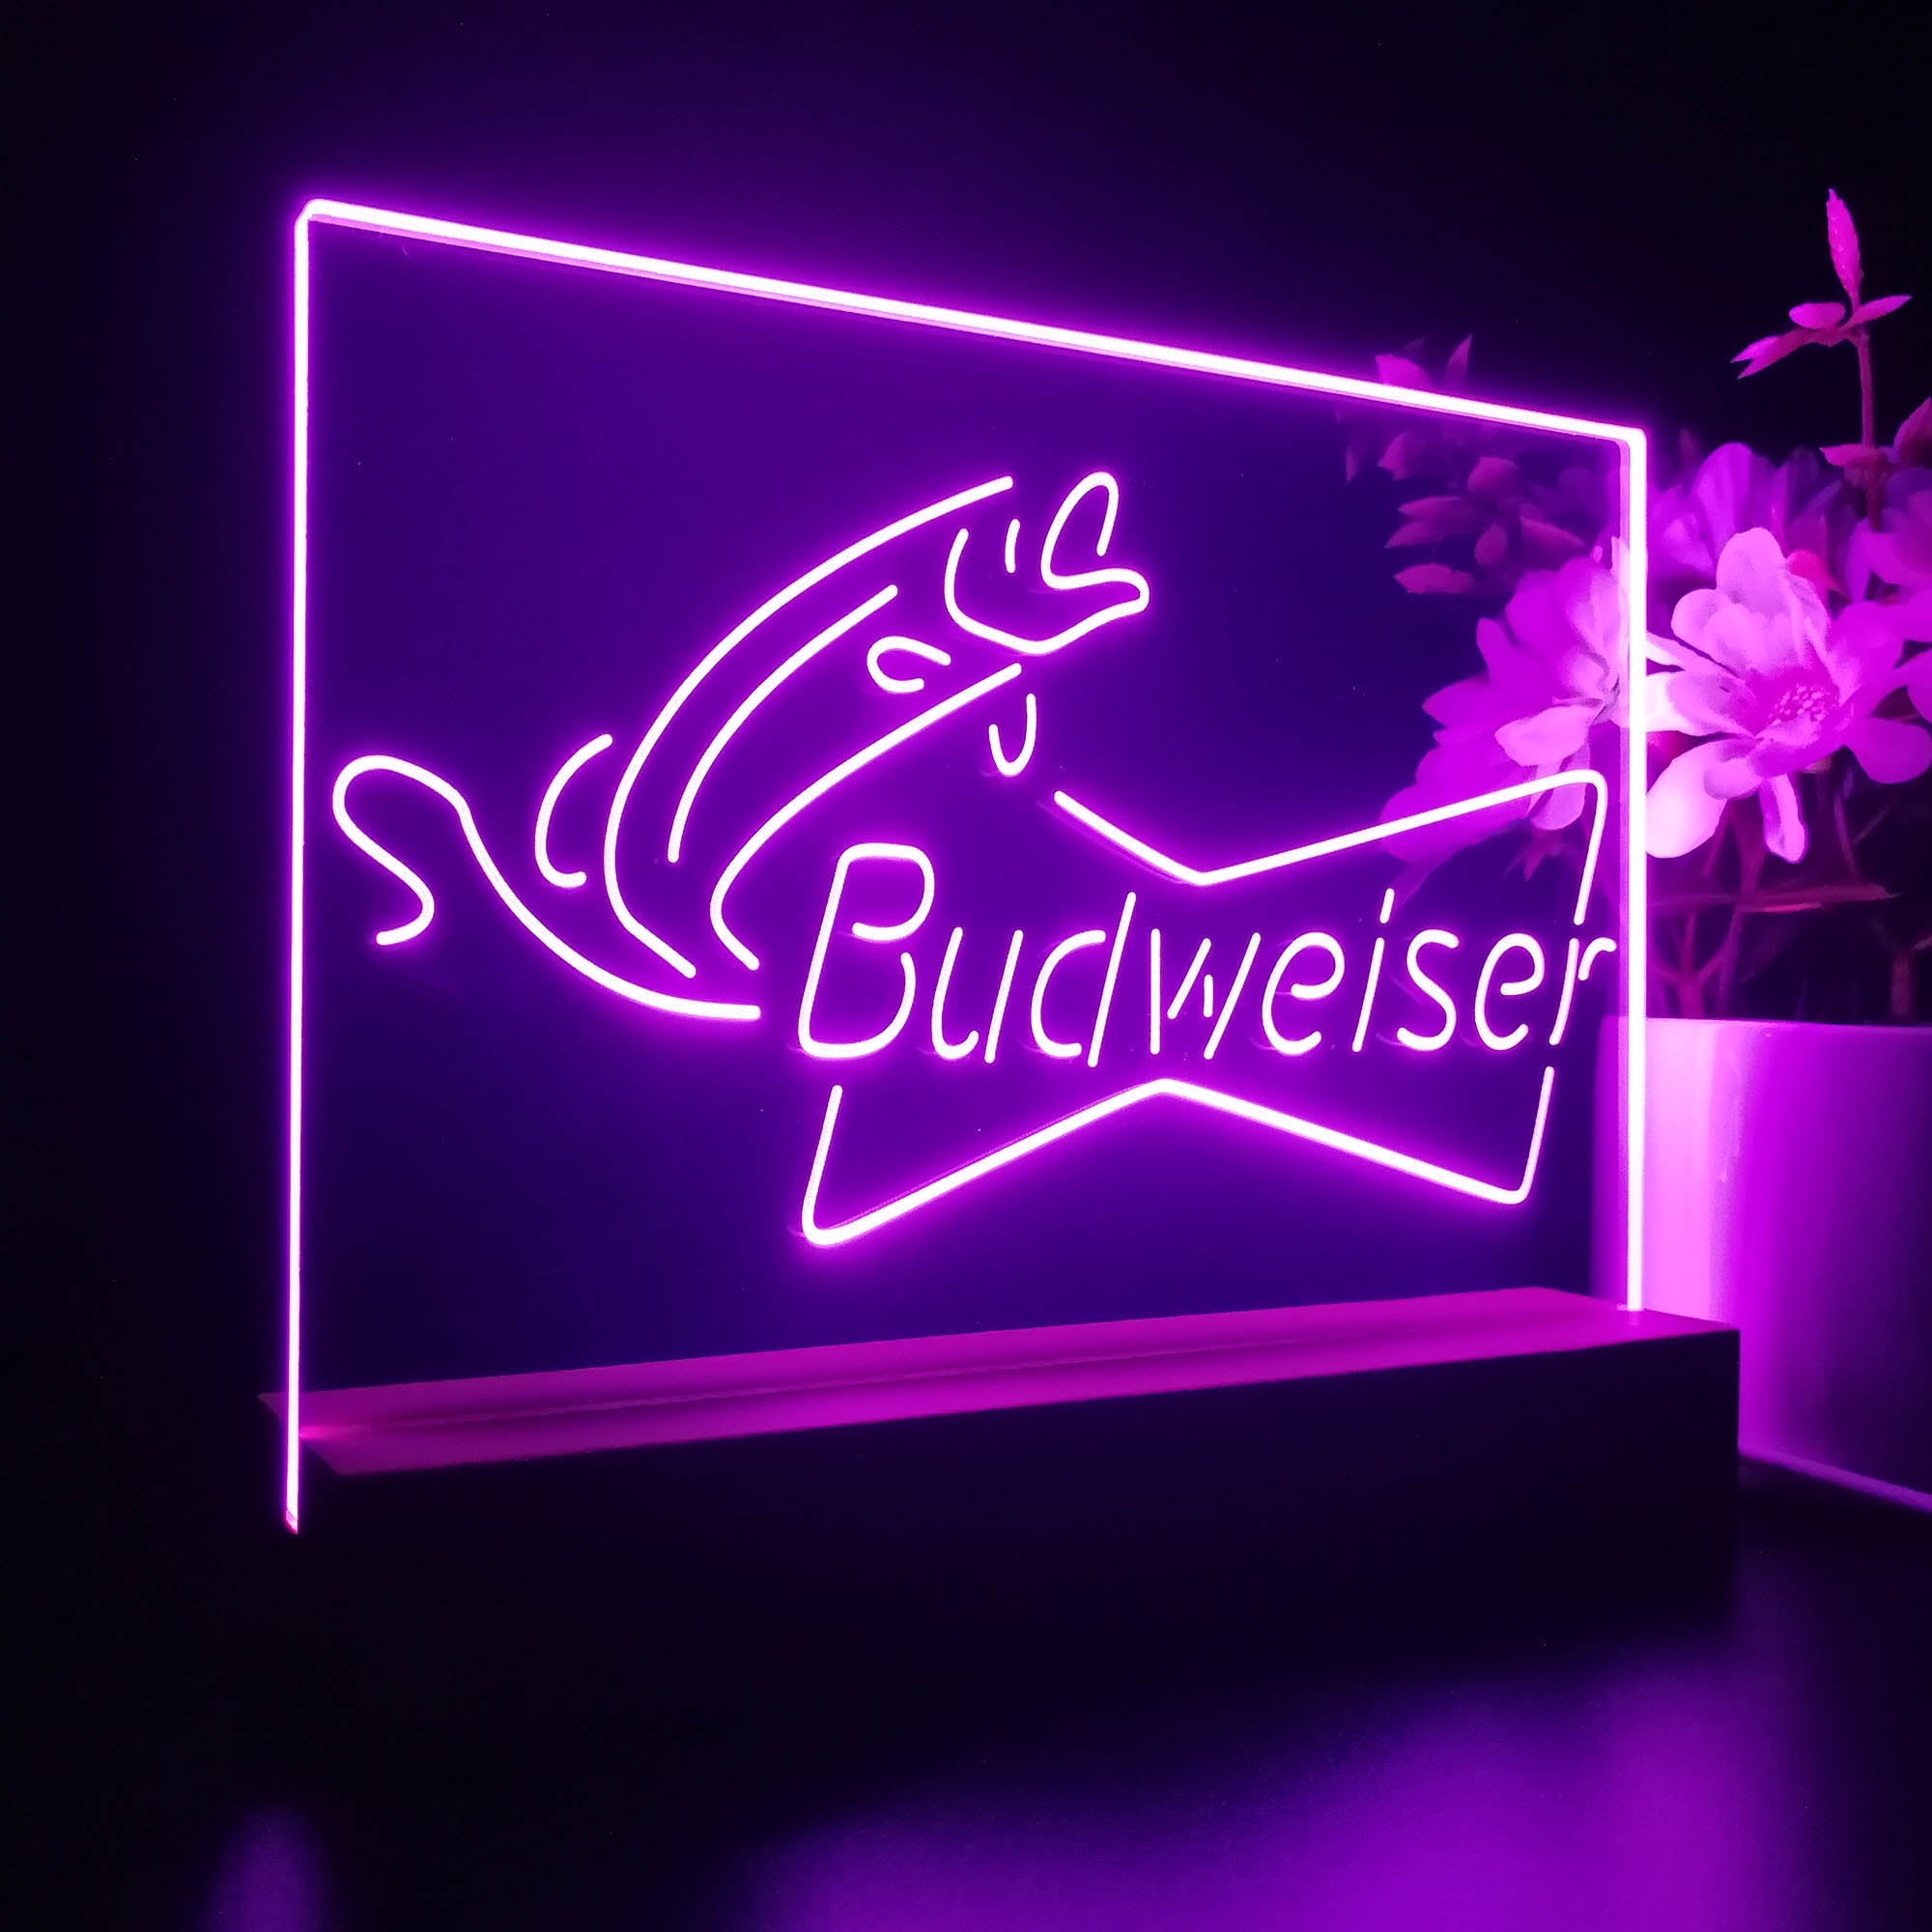 Budweiser Bow Tie Fishing Neon Sign Pub Bar Lamp